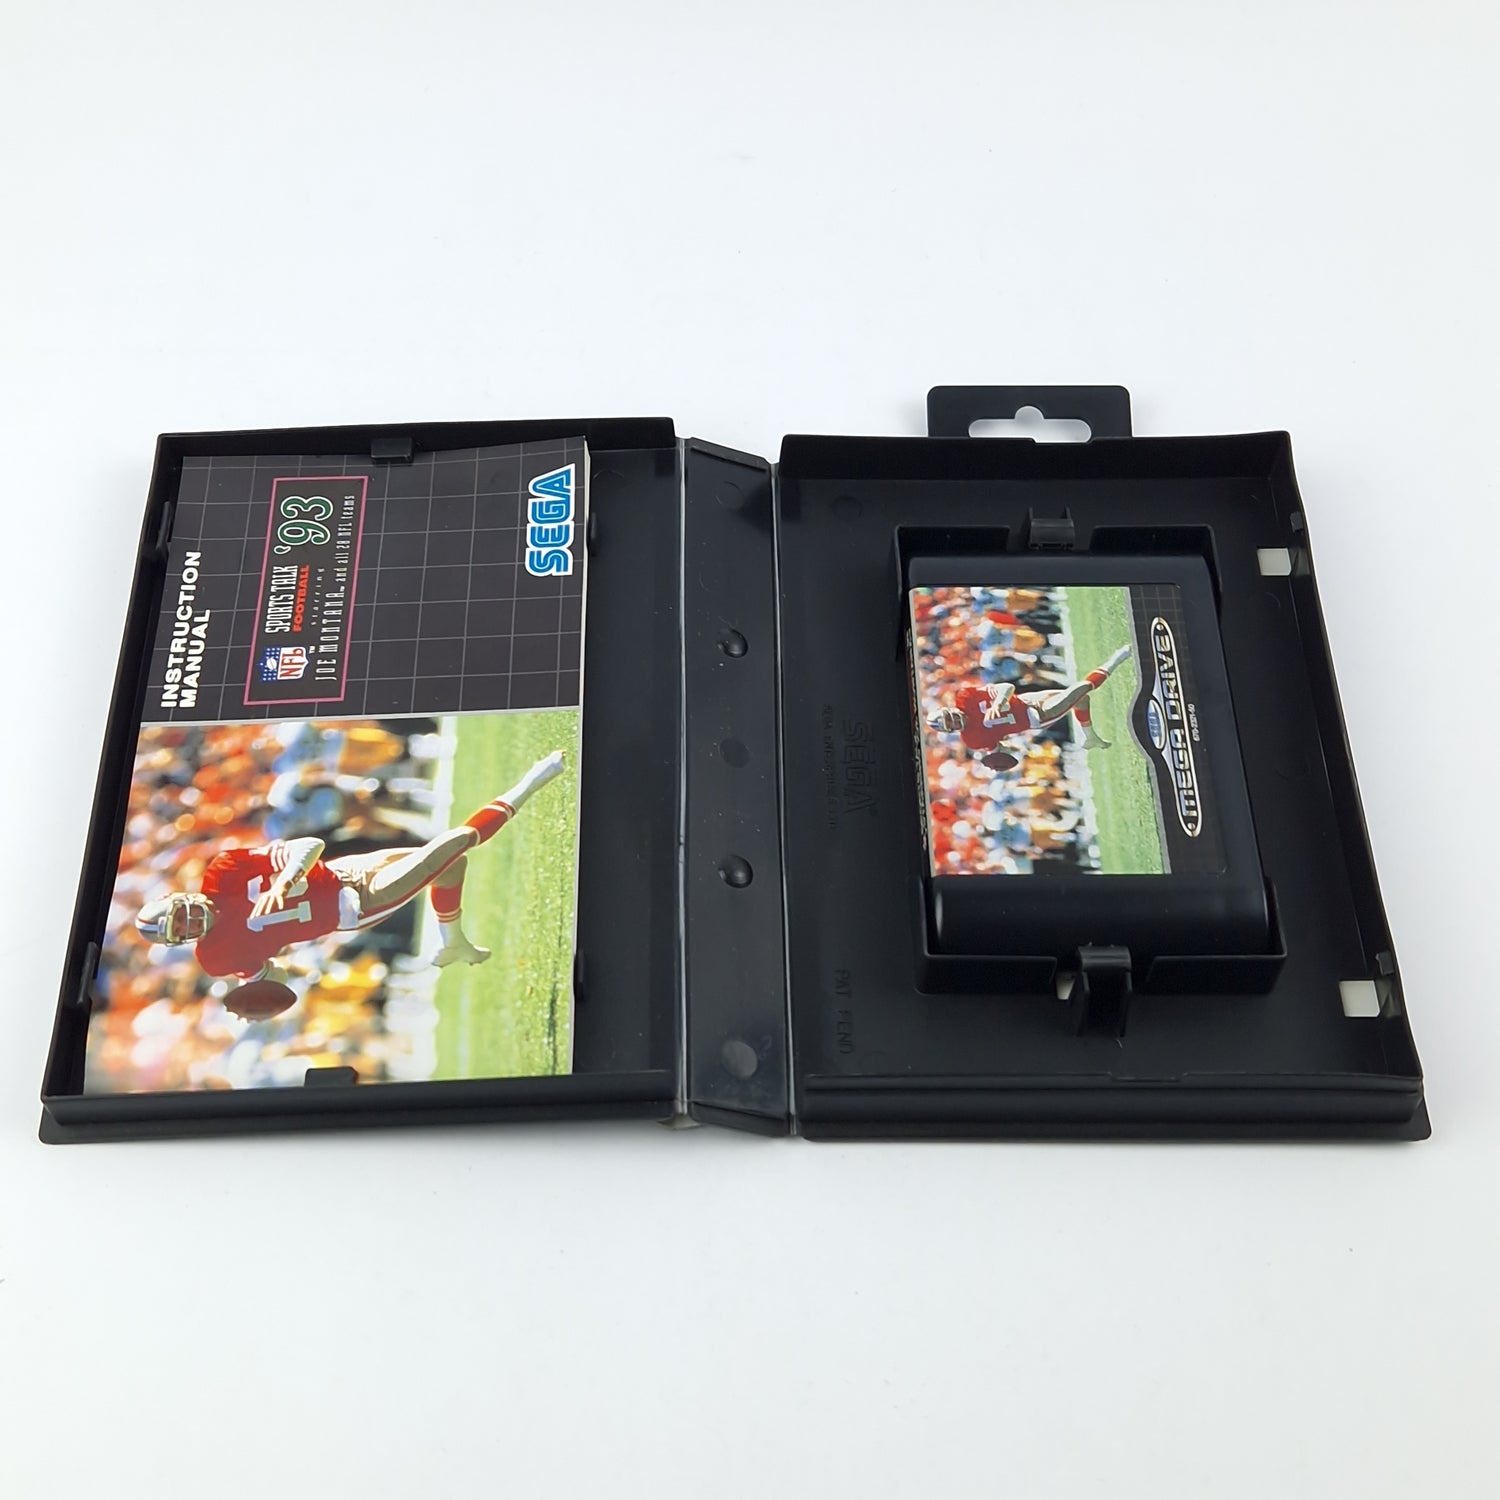 Sega Mega Drive Game: Sports Talk Football 93 - Module Instructions OVP cib